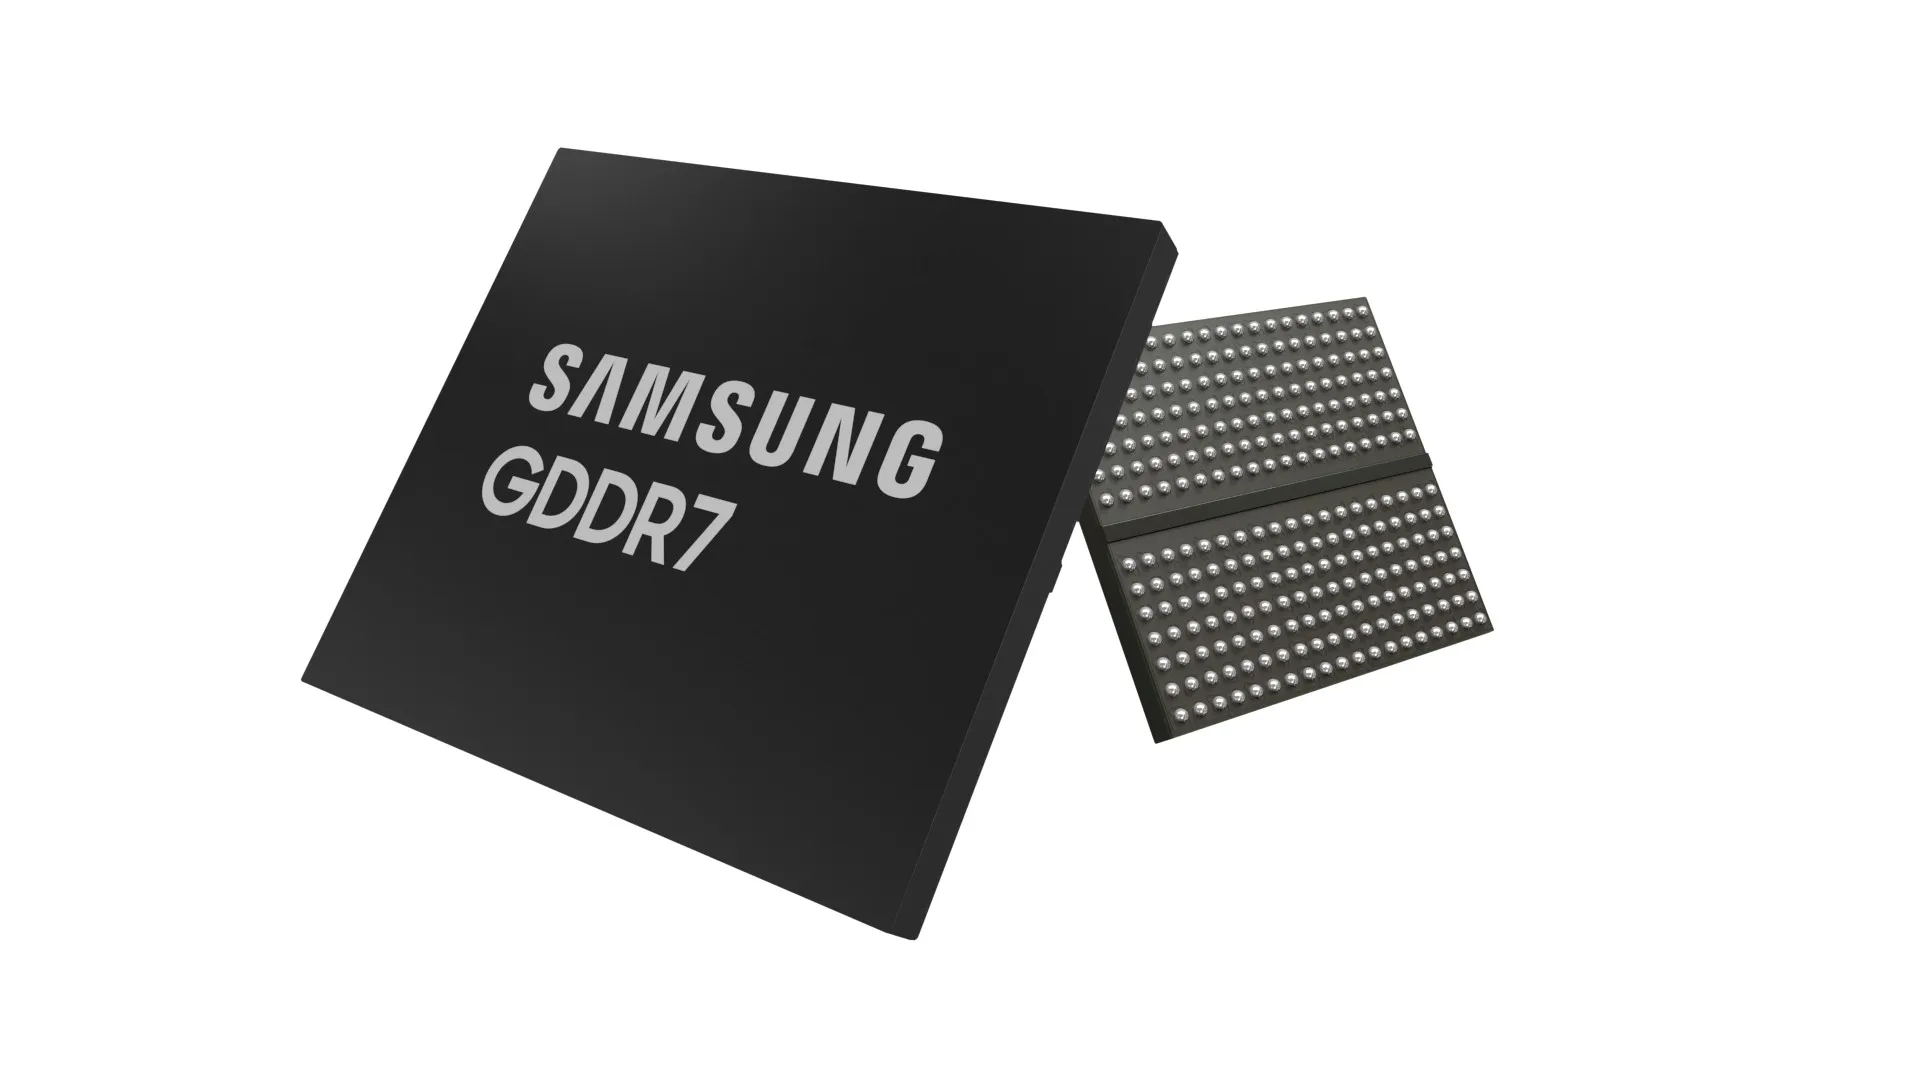 Samsung's GDDR7 memory